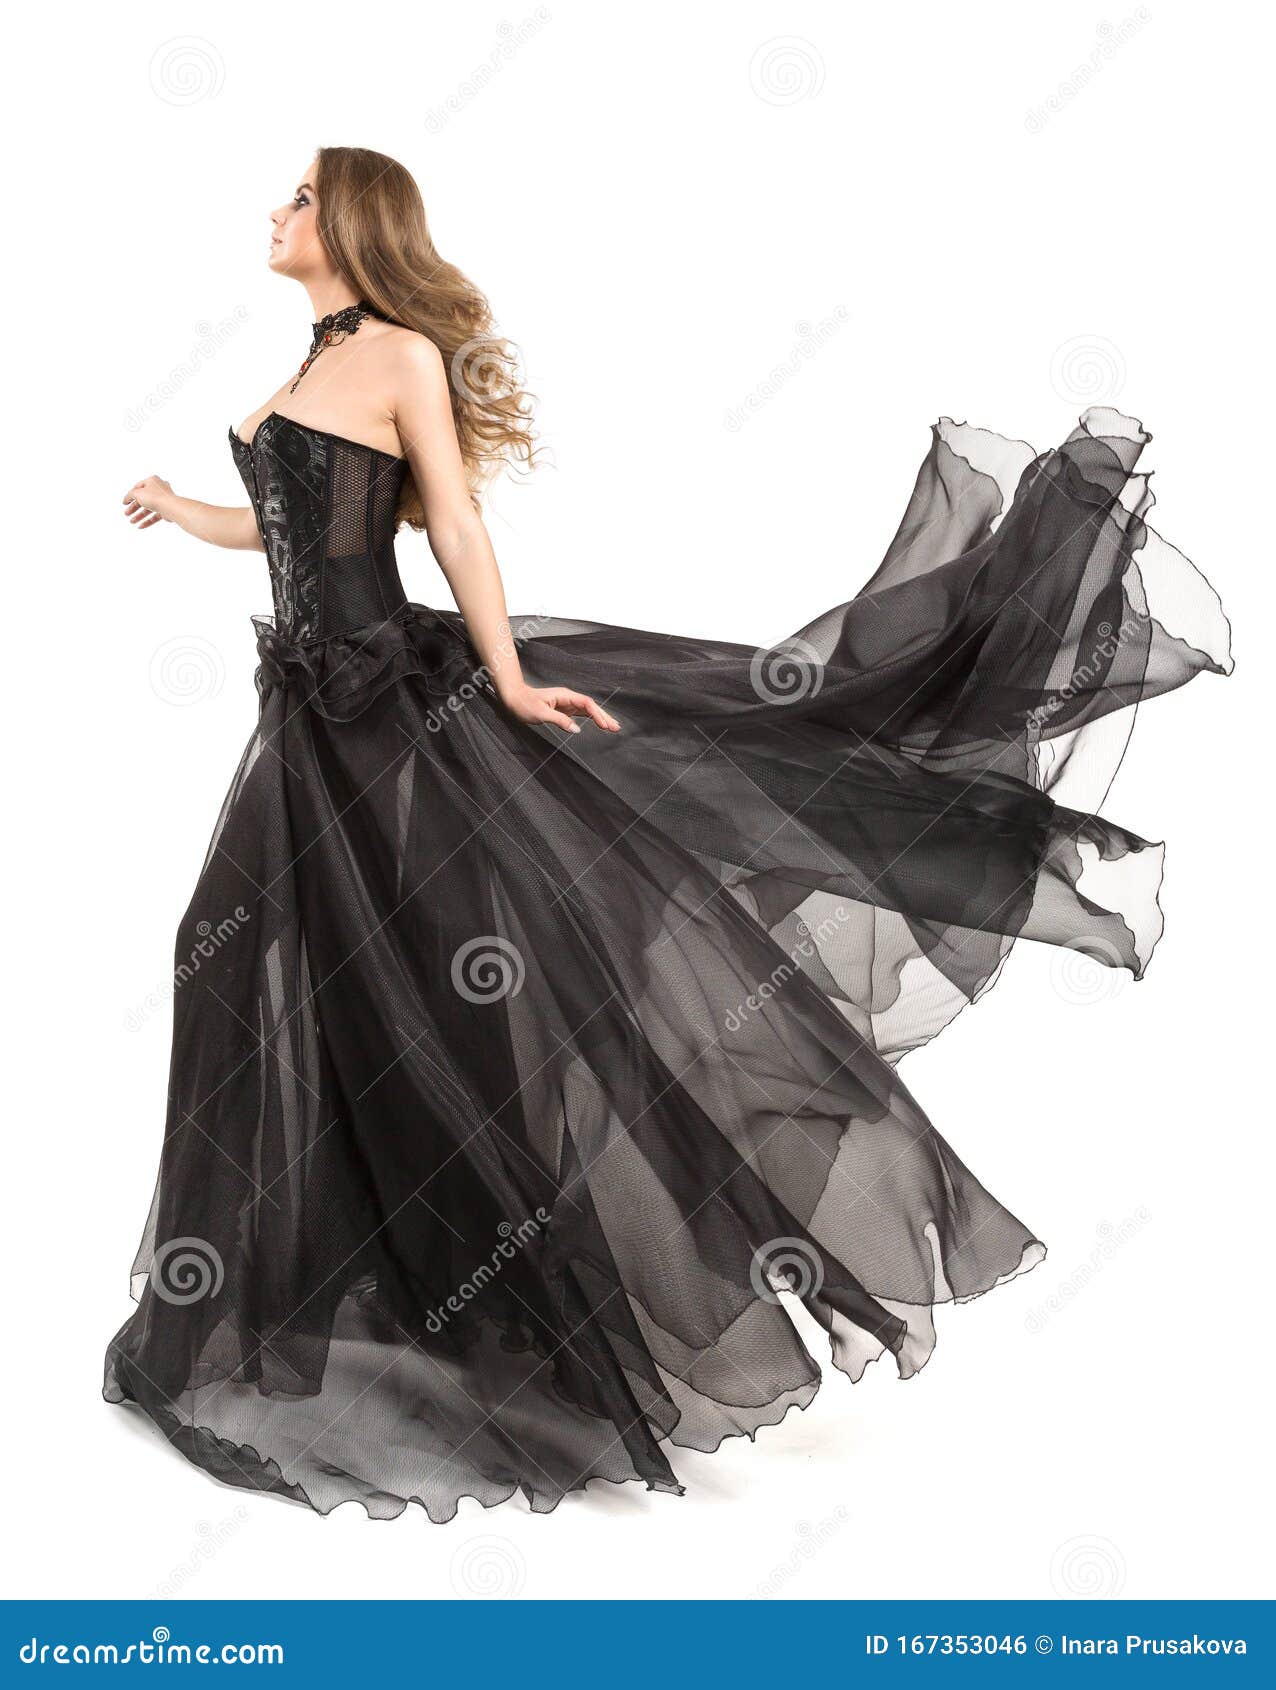 woman black dress flying on wind, beautiful fashion model in fluttering chiffon gown on white